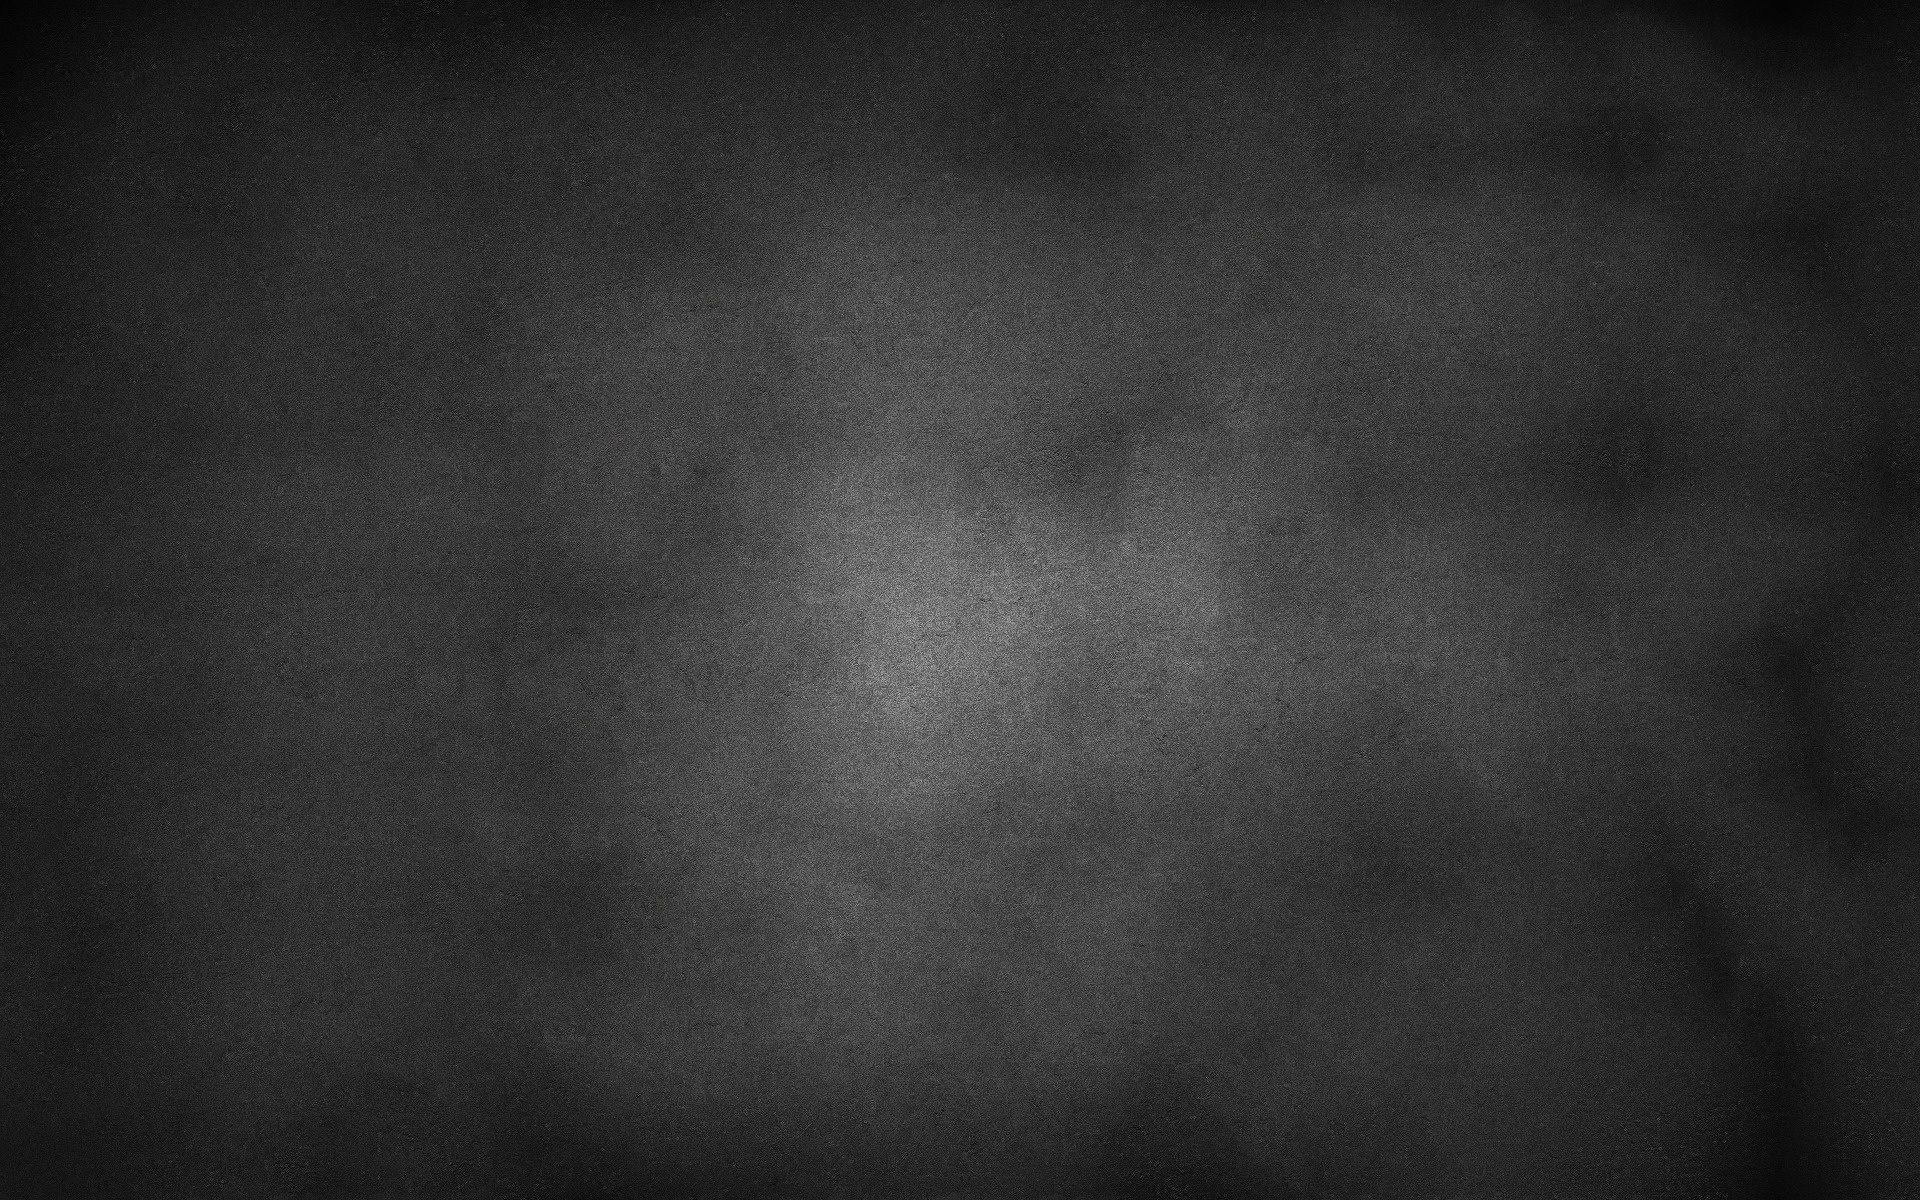 Black And Gray Backgrounds Wallpaper Cave HD Wallpapers Download Free Images Wallpaper [wallpaper981.blogspot.com]